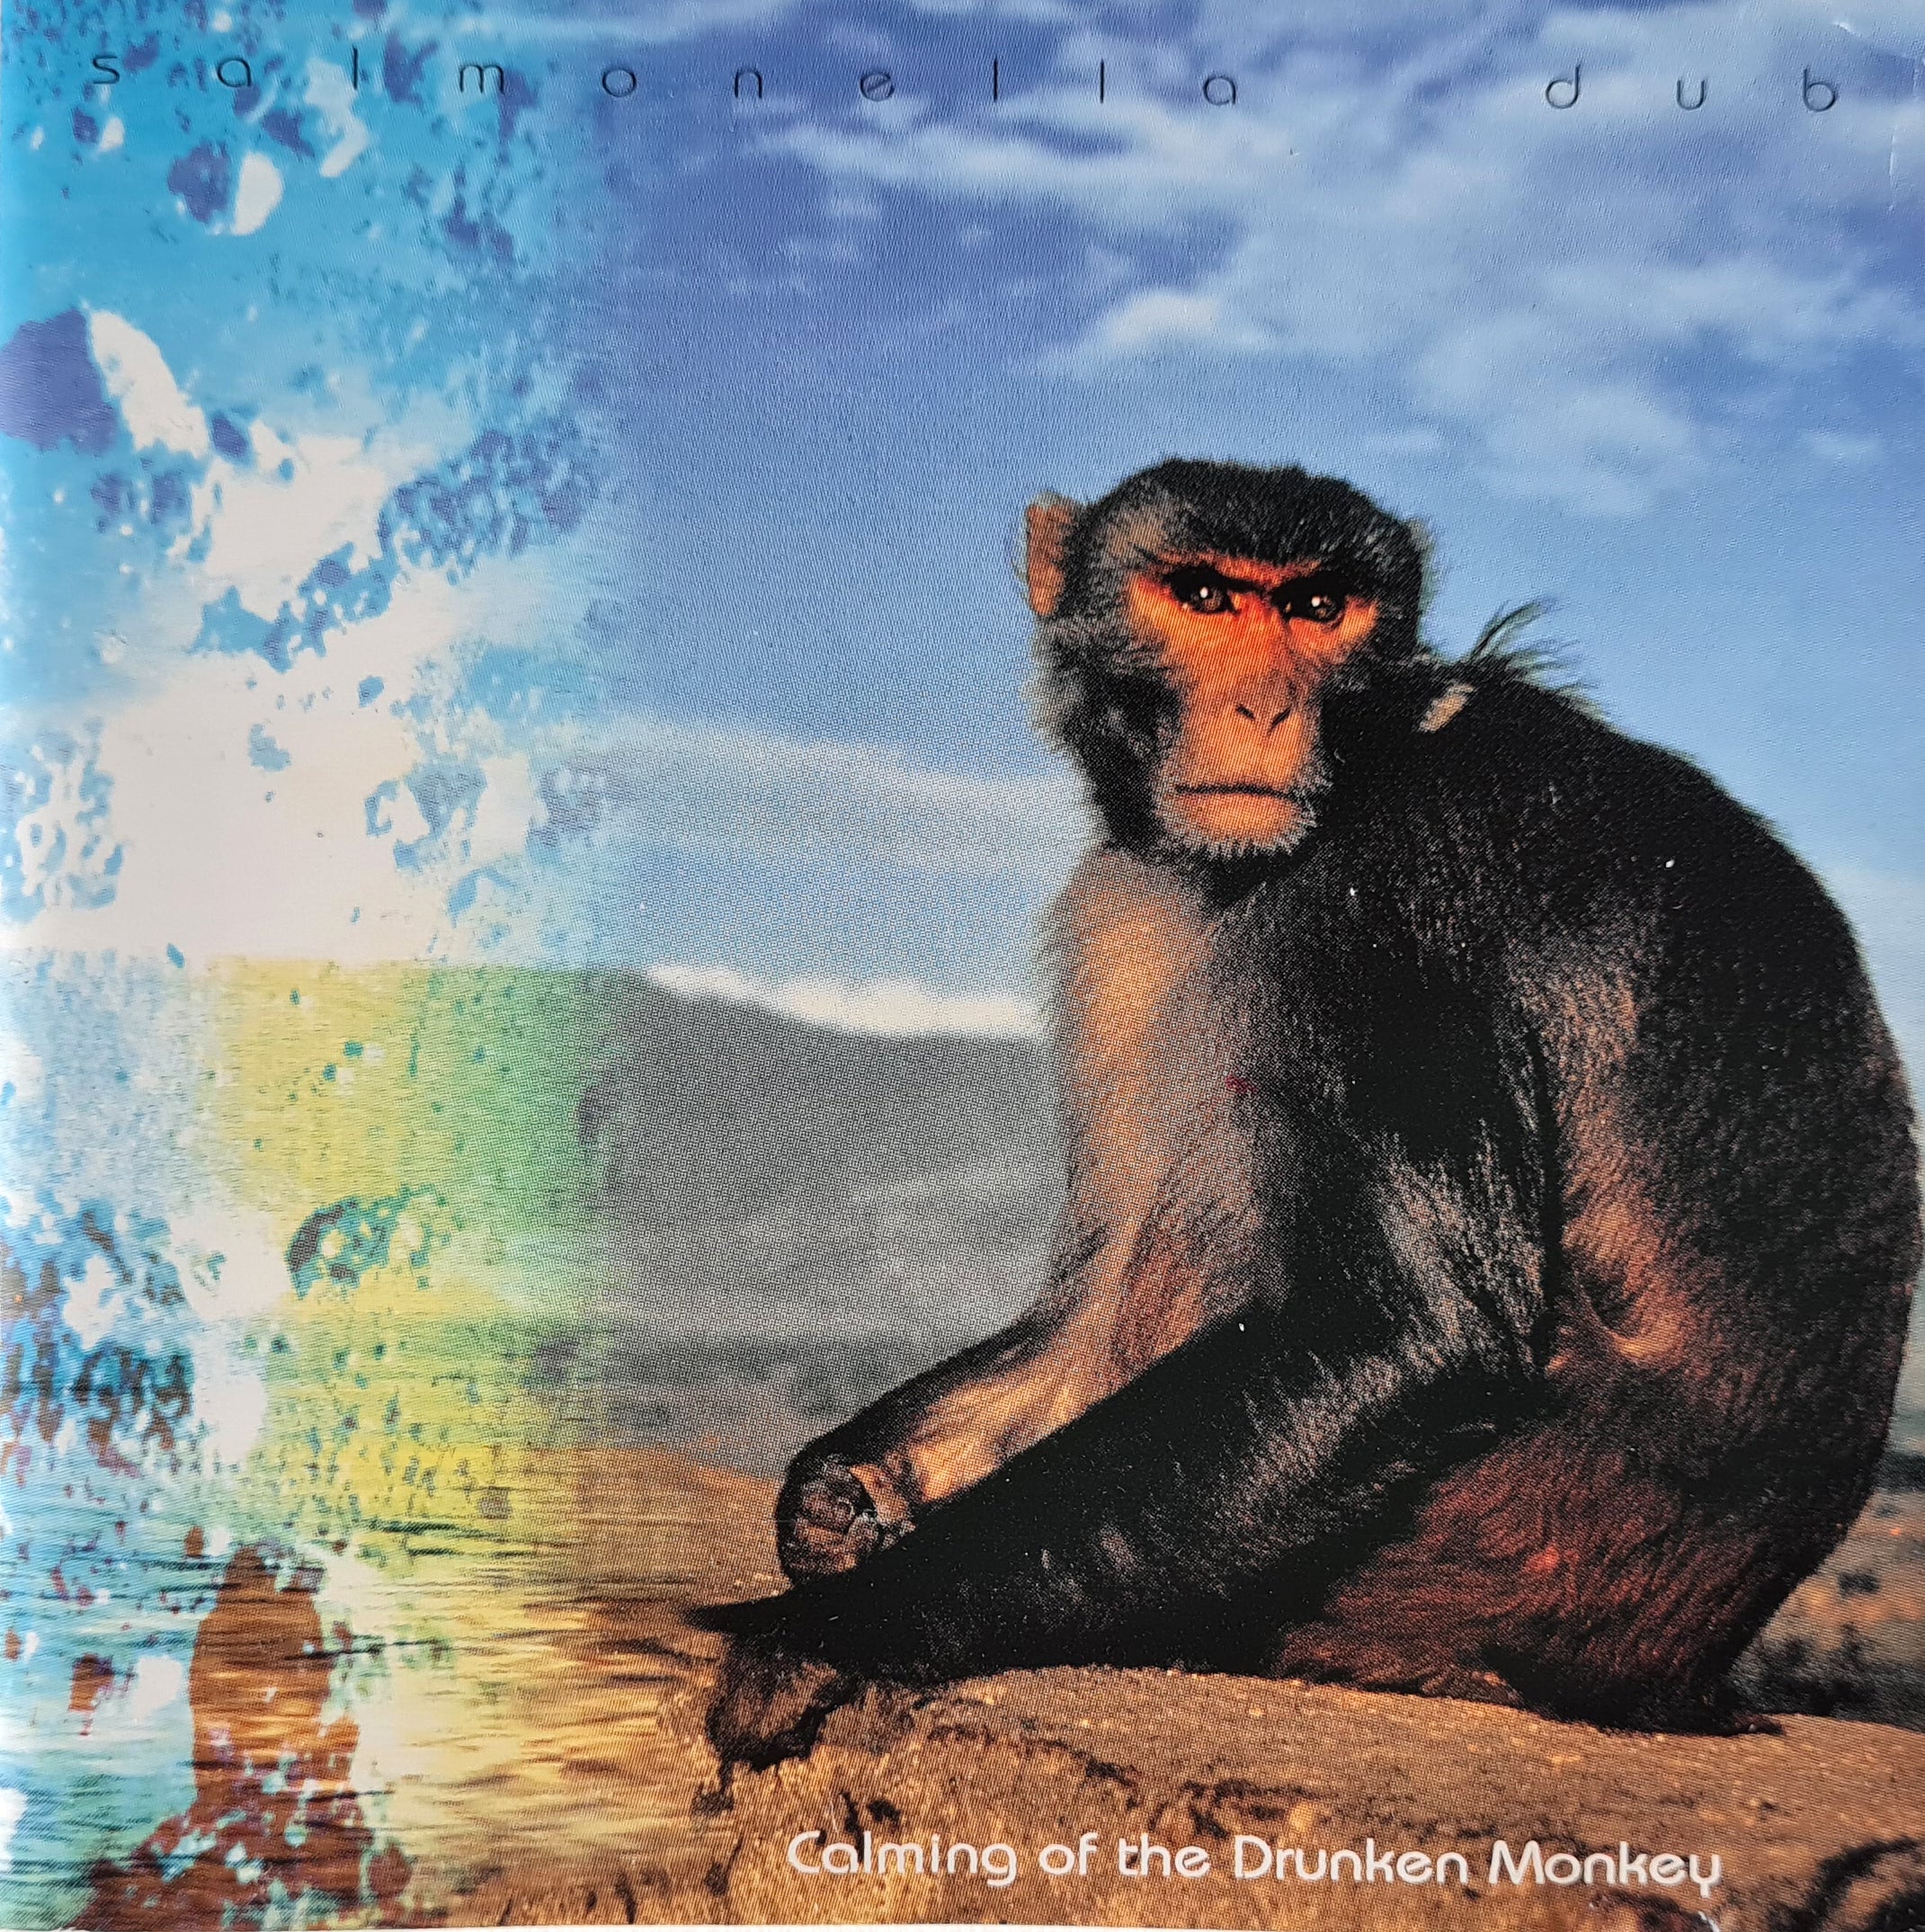 Salmonella Dub - Calming the Drunken Monkey (CD)